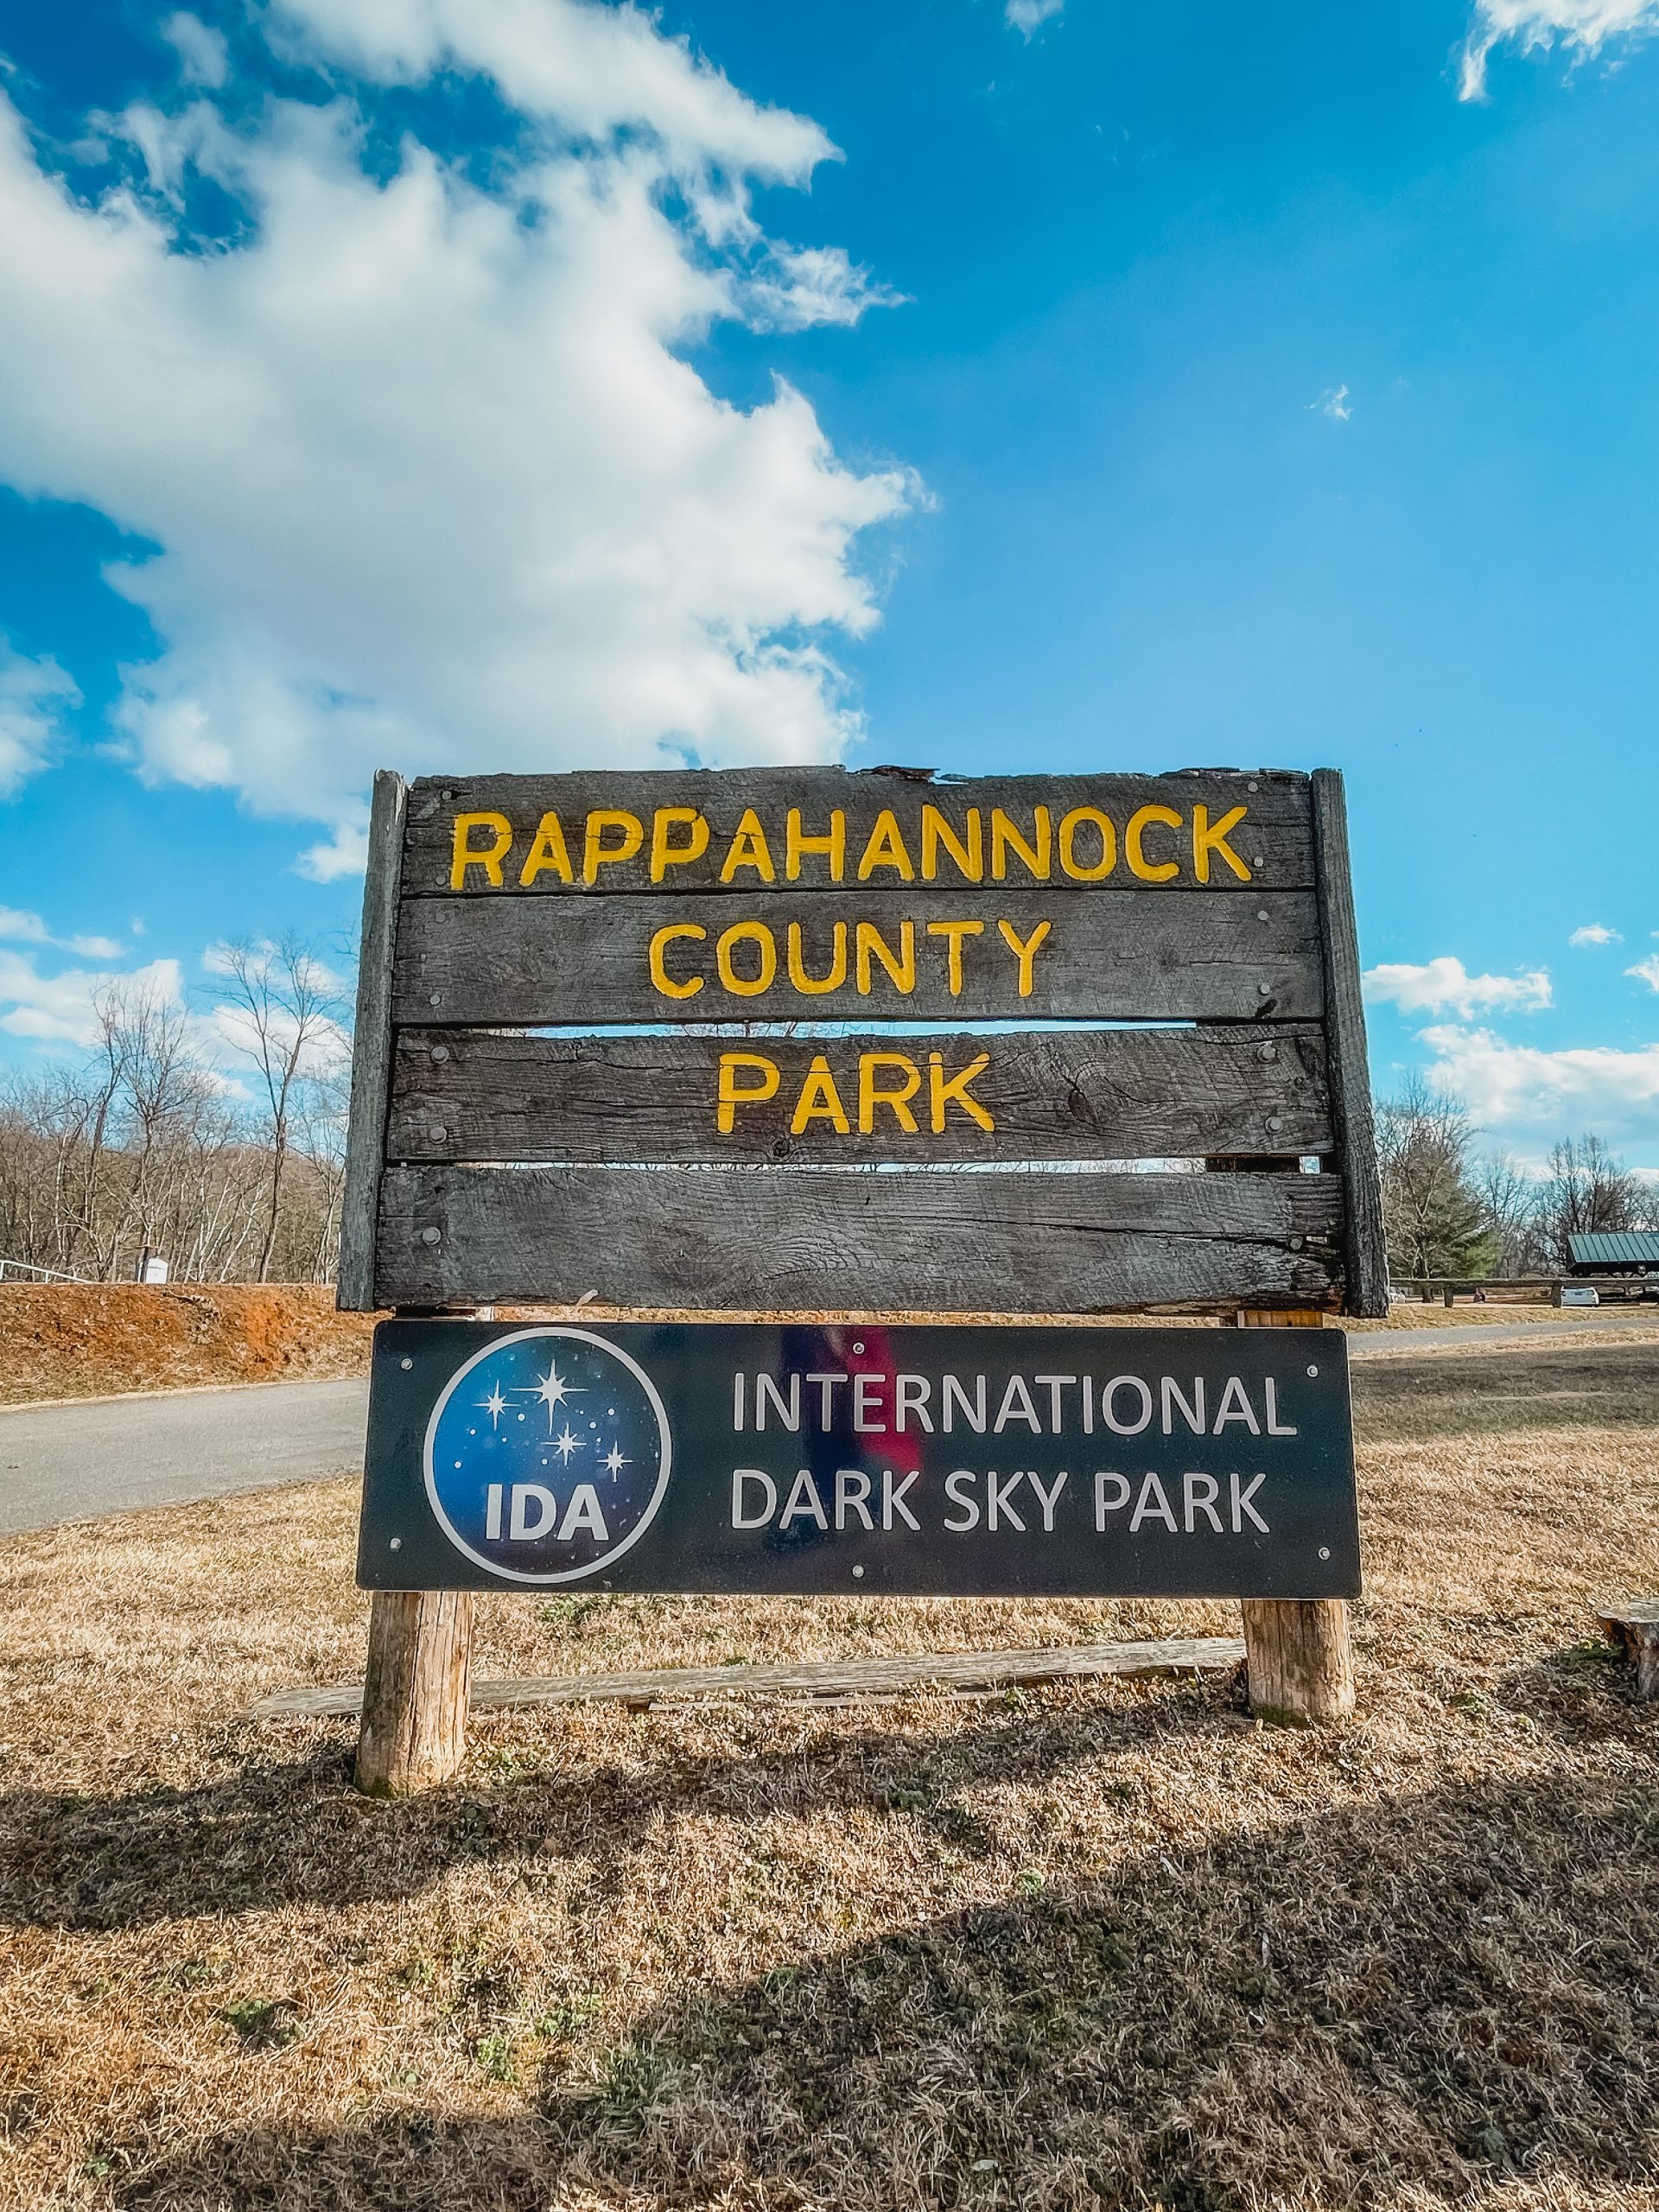 International Dark Sky Park